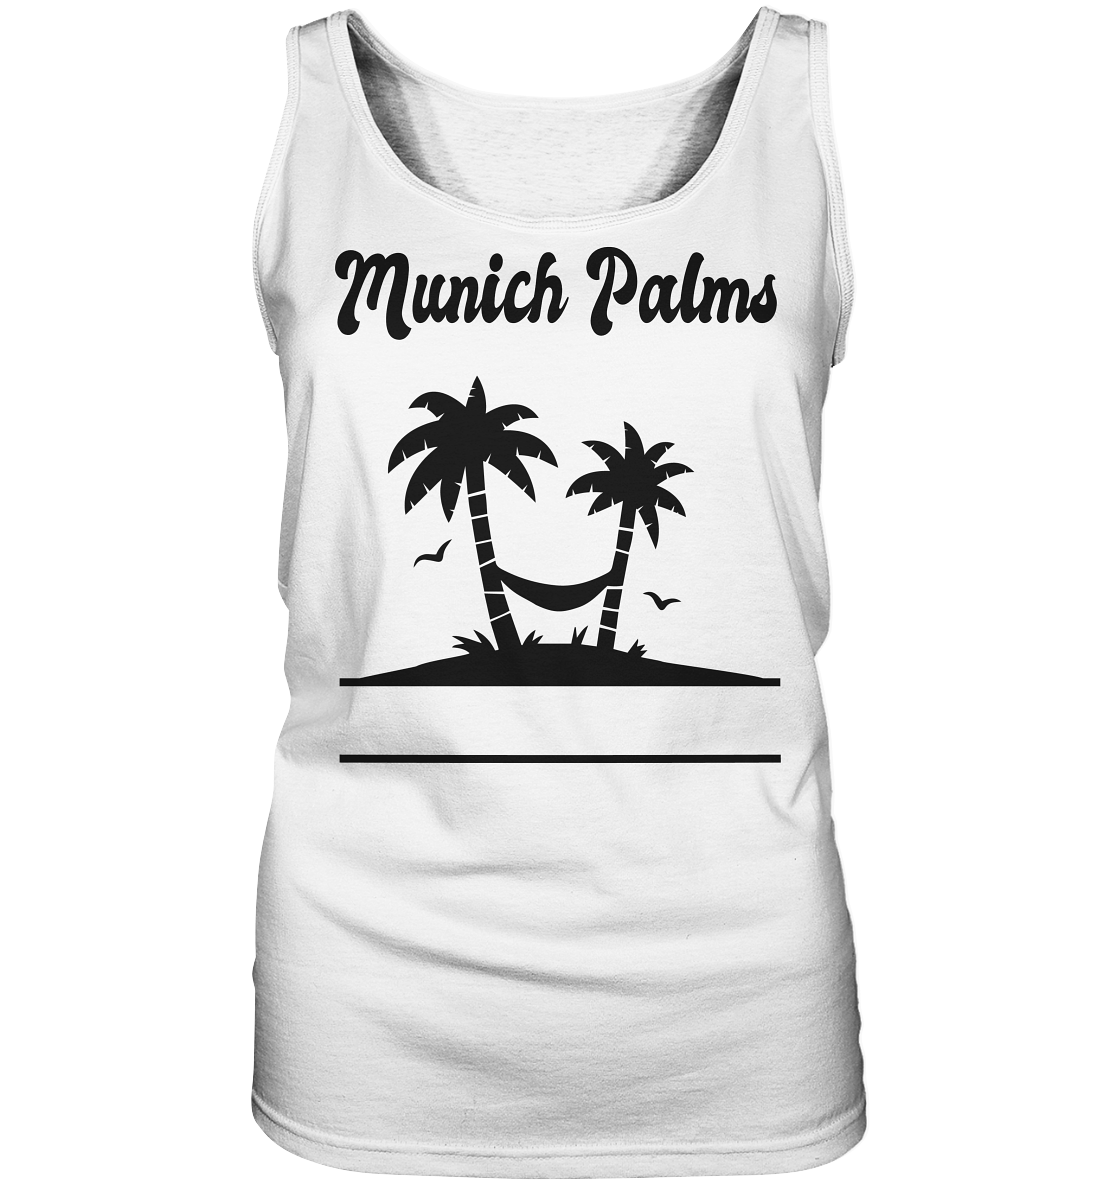 Design Munich Palms  - Ladies Tank-Top